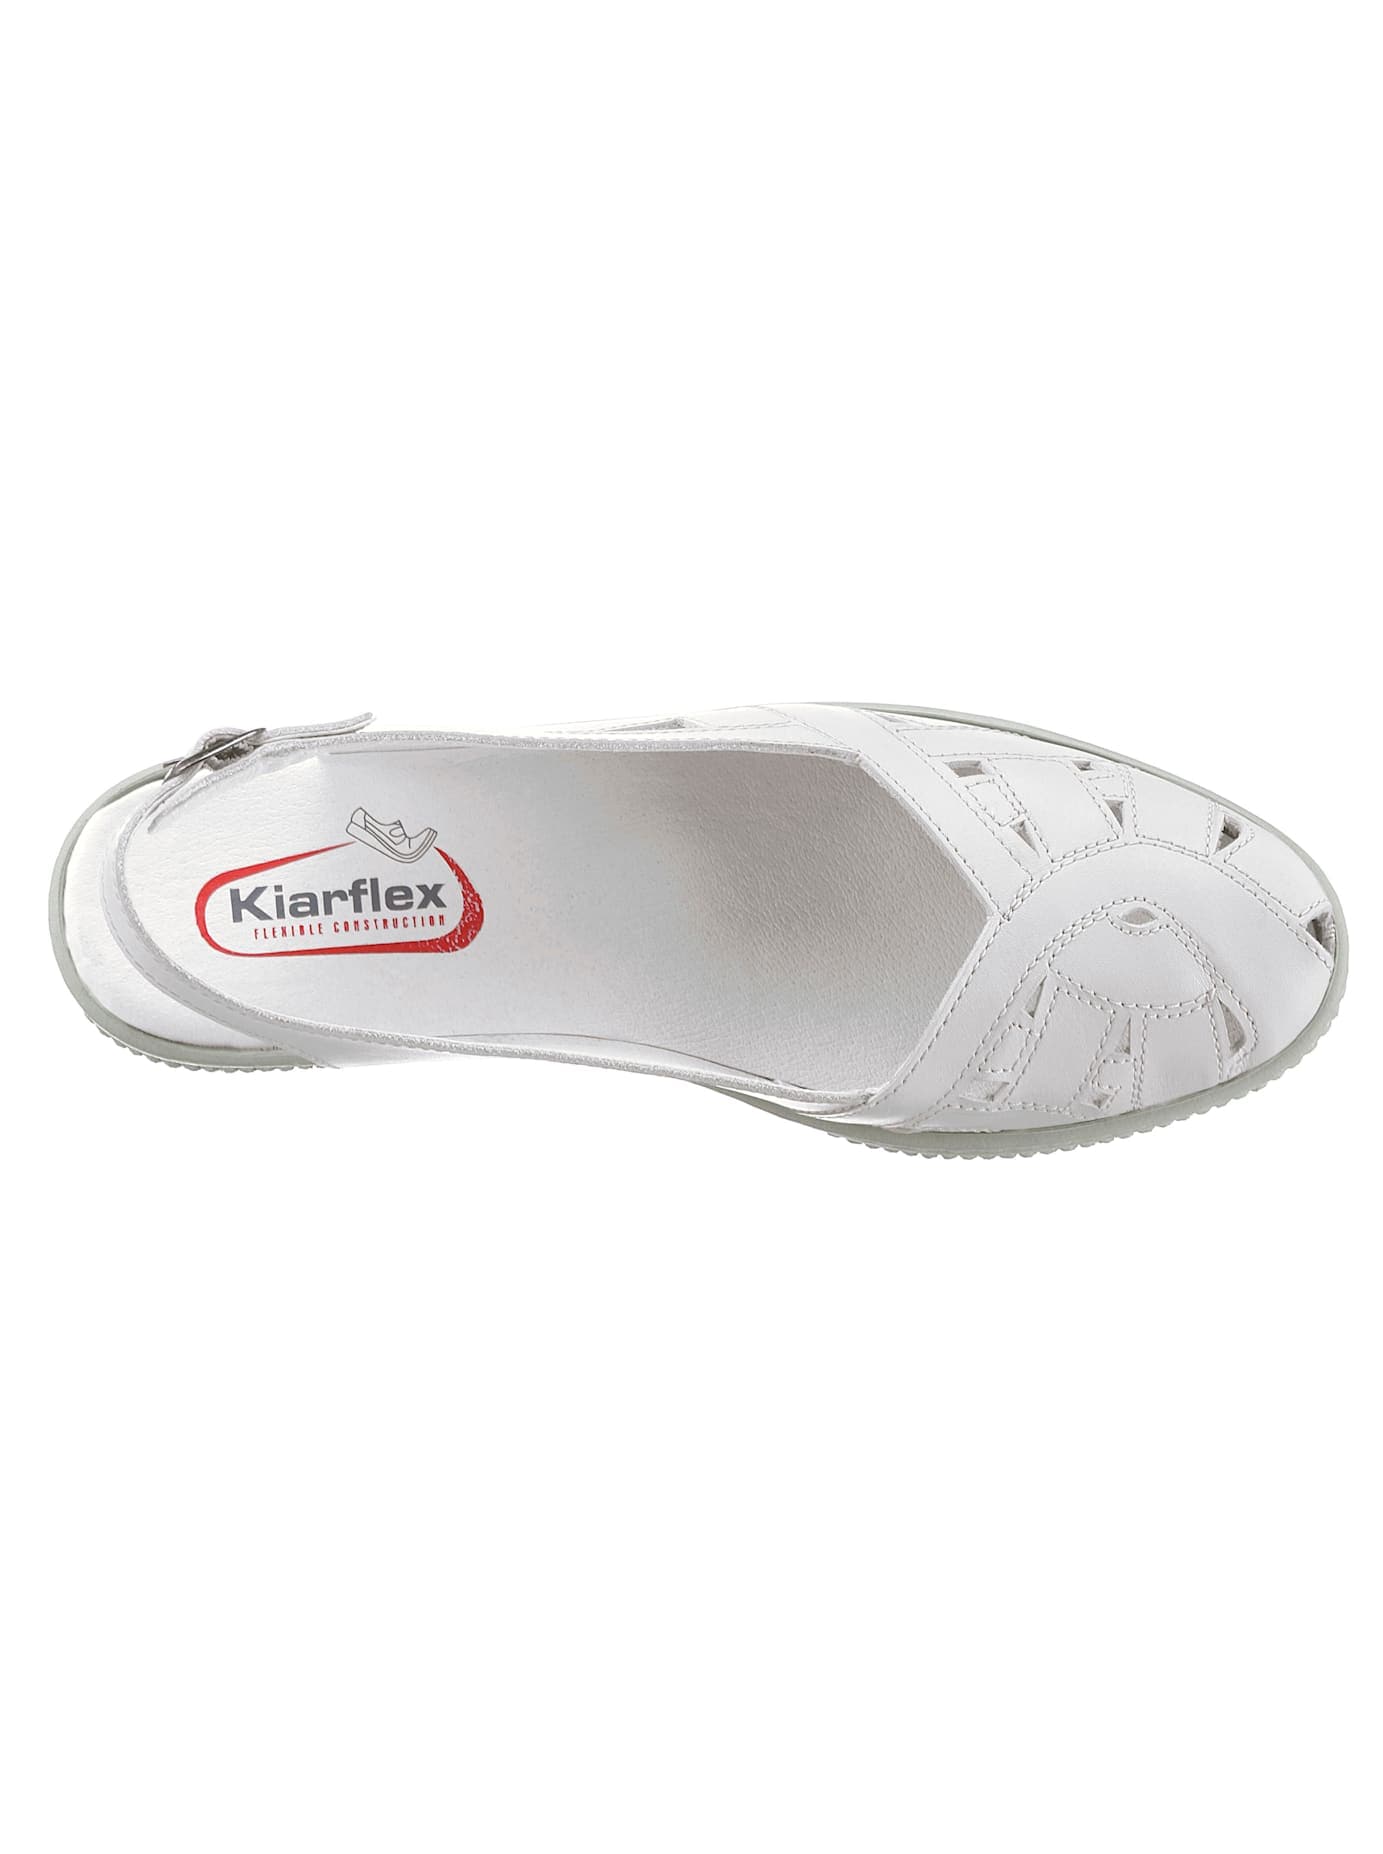 Kiarflex Sandalette